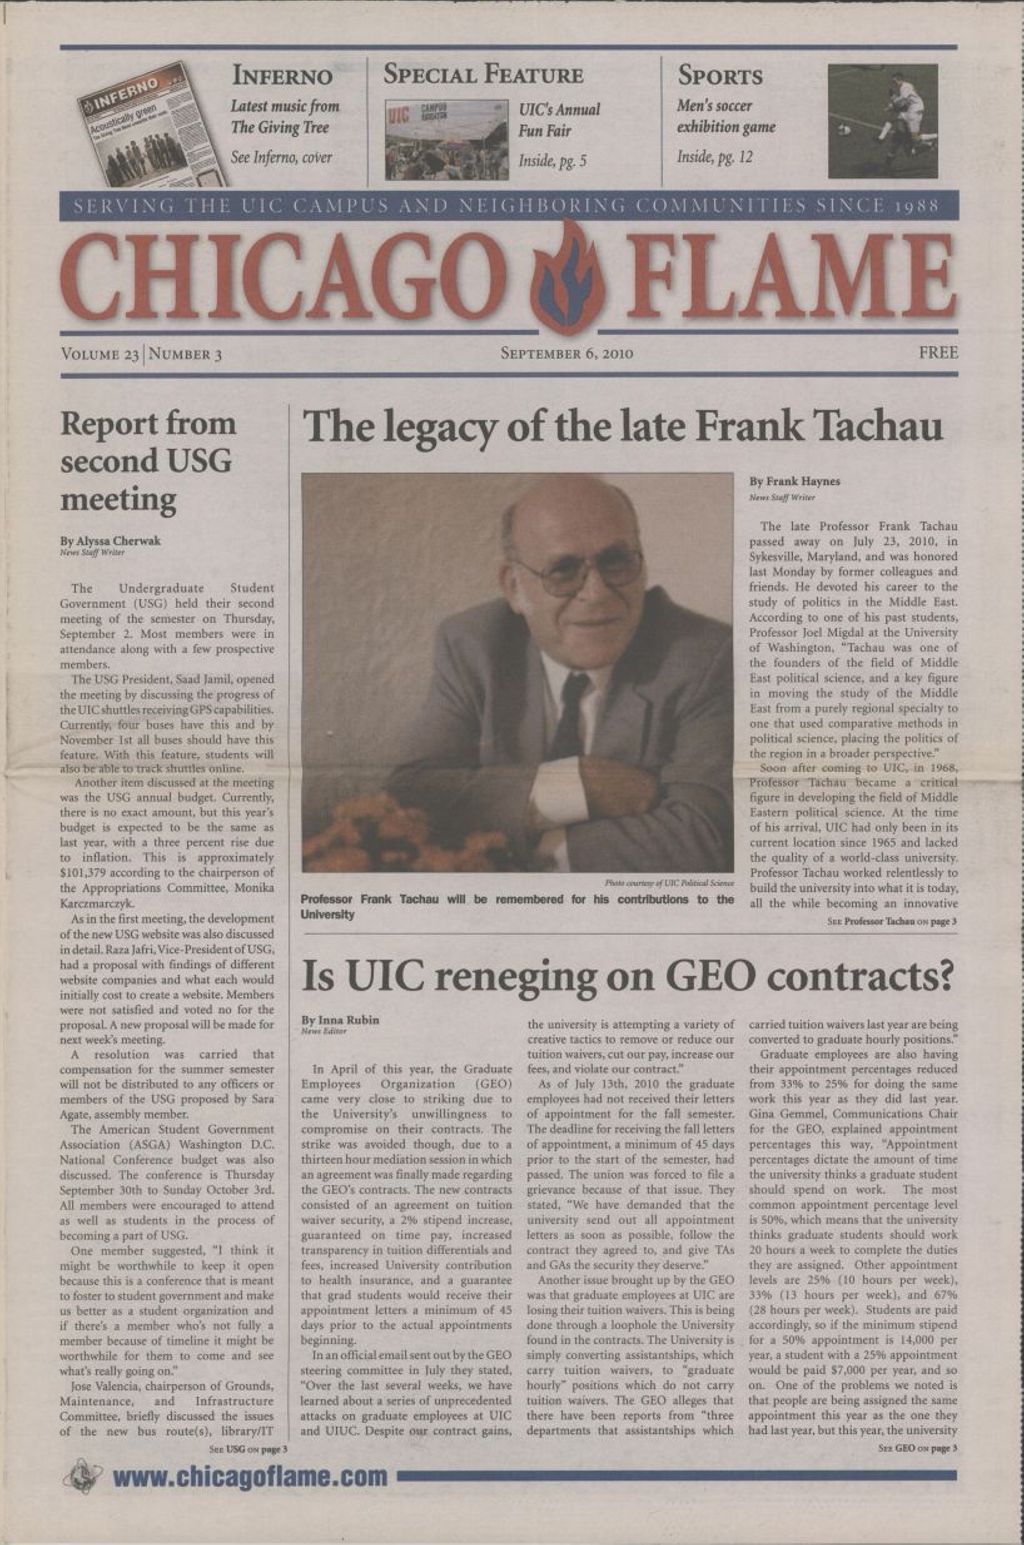 Chicago Flame (September 6, 2010)